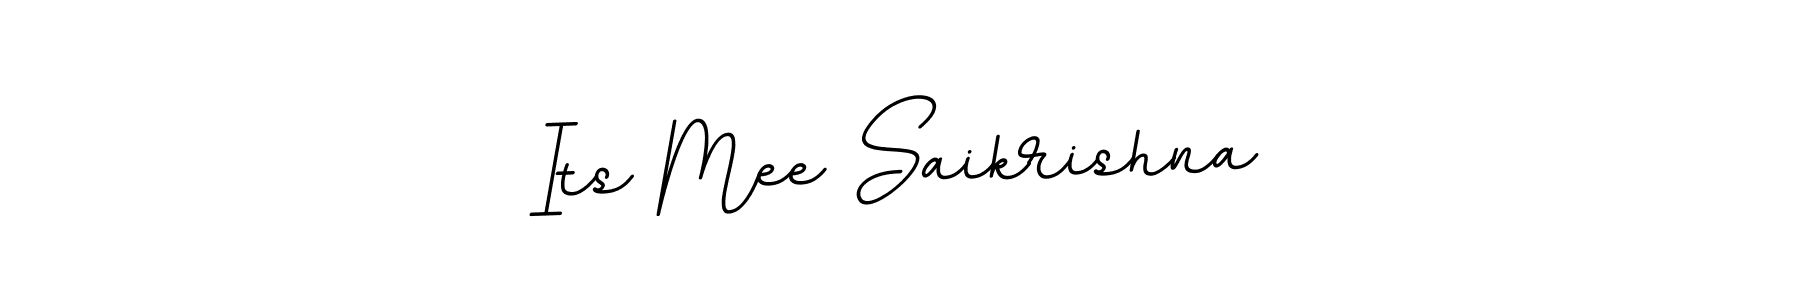 How to Draw Its Mee Saikrishna signature style? BallpointsItalic-DORy9 is a latest design signature styles for name Its Mee Saikrishna. Its Mee Saikrishna signature style 11 images and pictures png